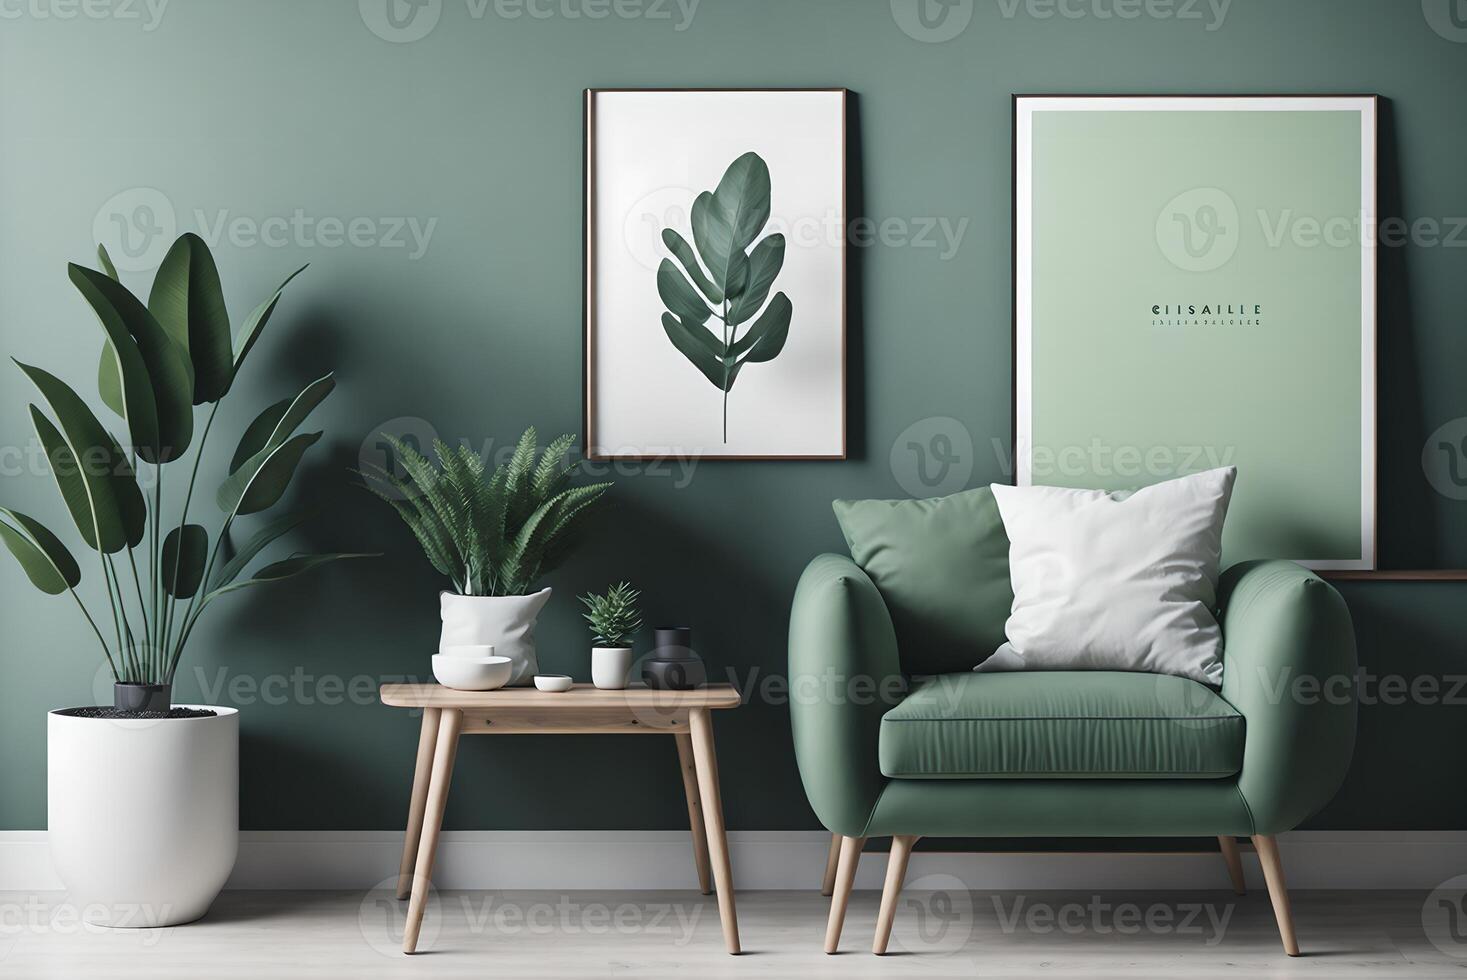 stylish interior design of living room with modern mint sofa ...